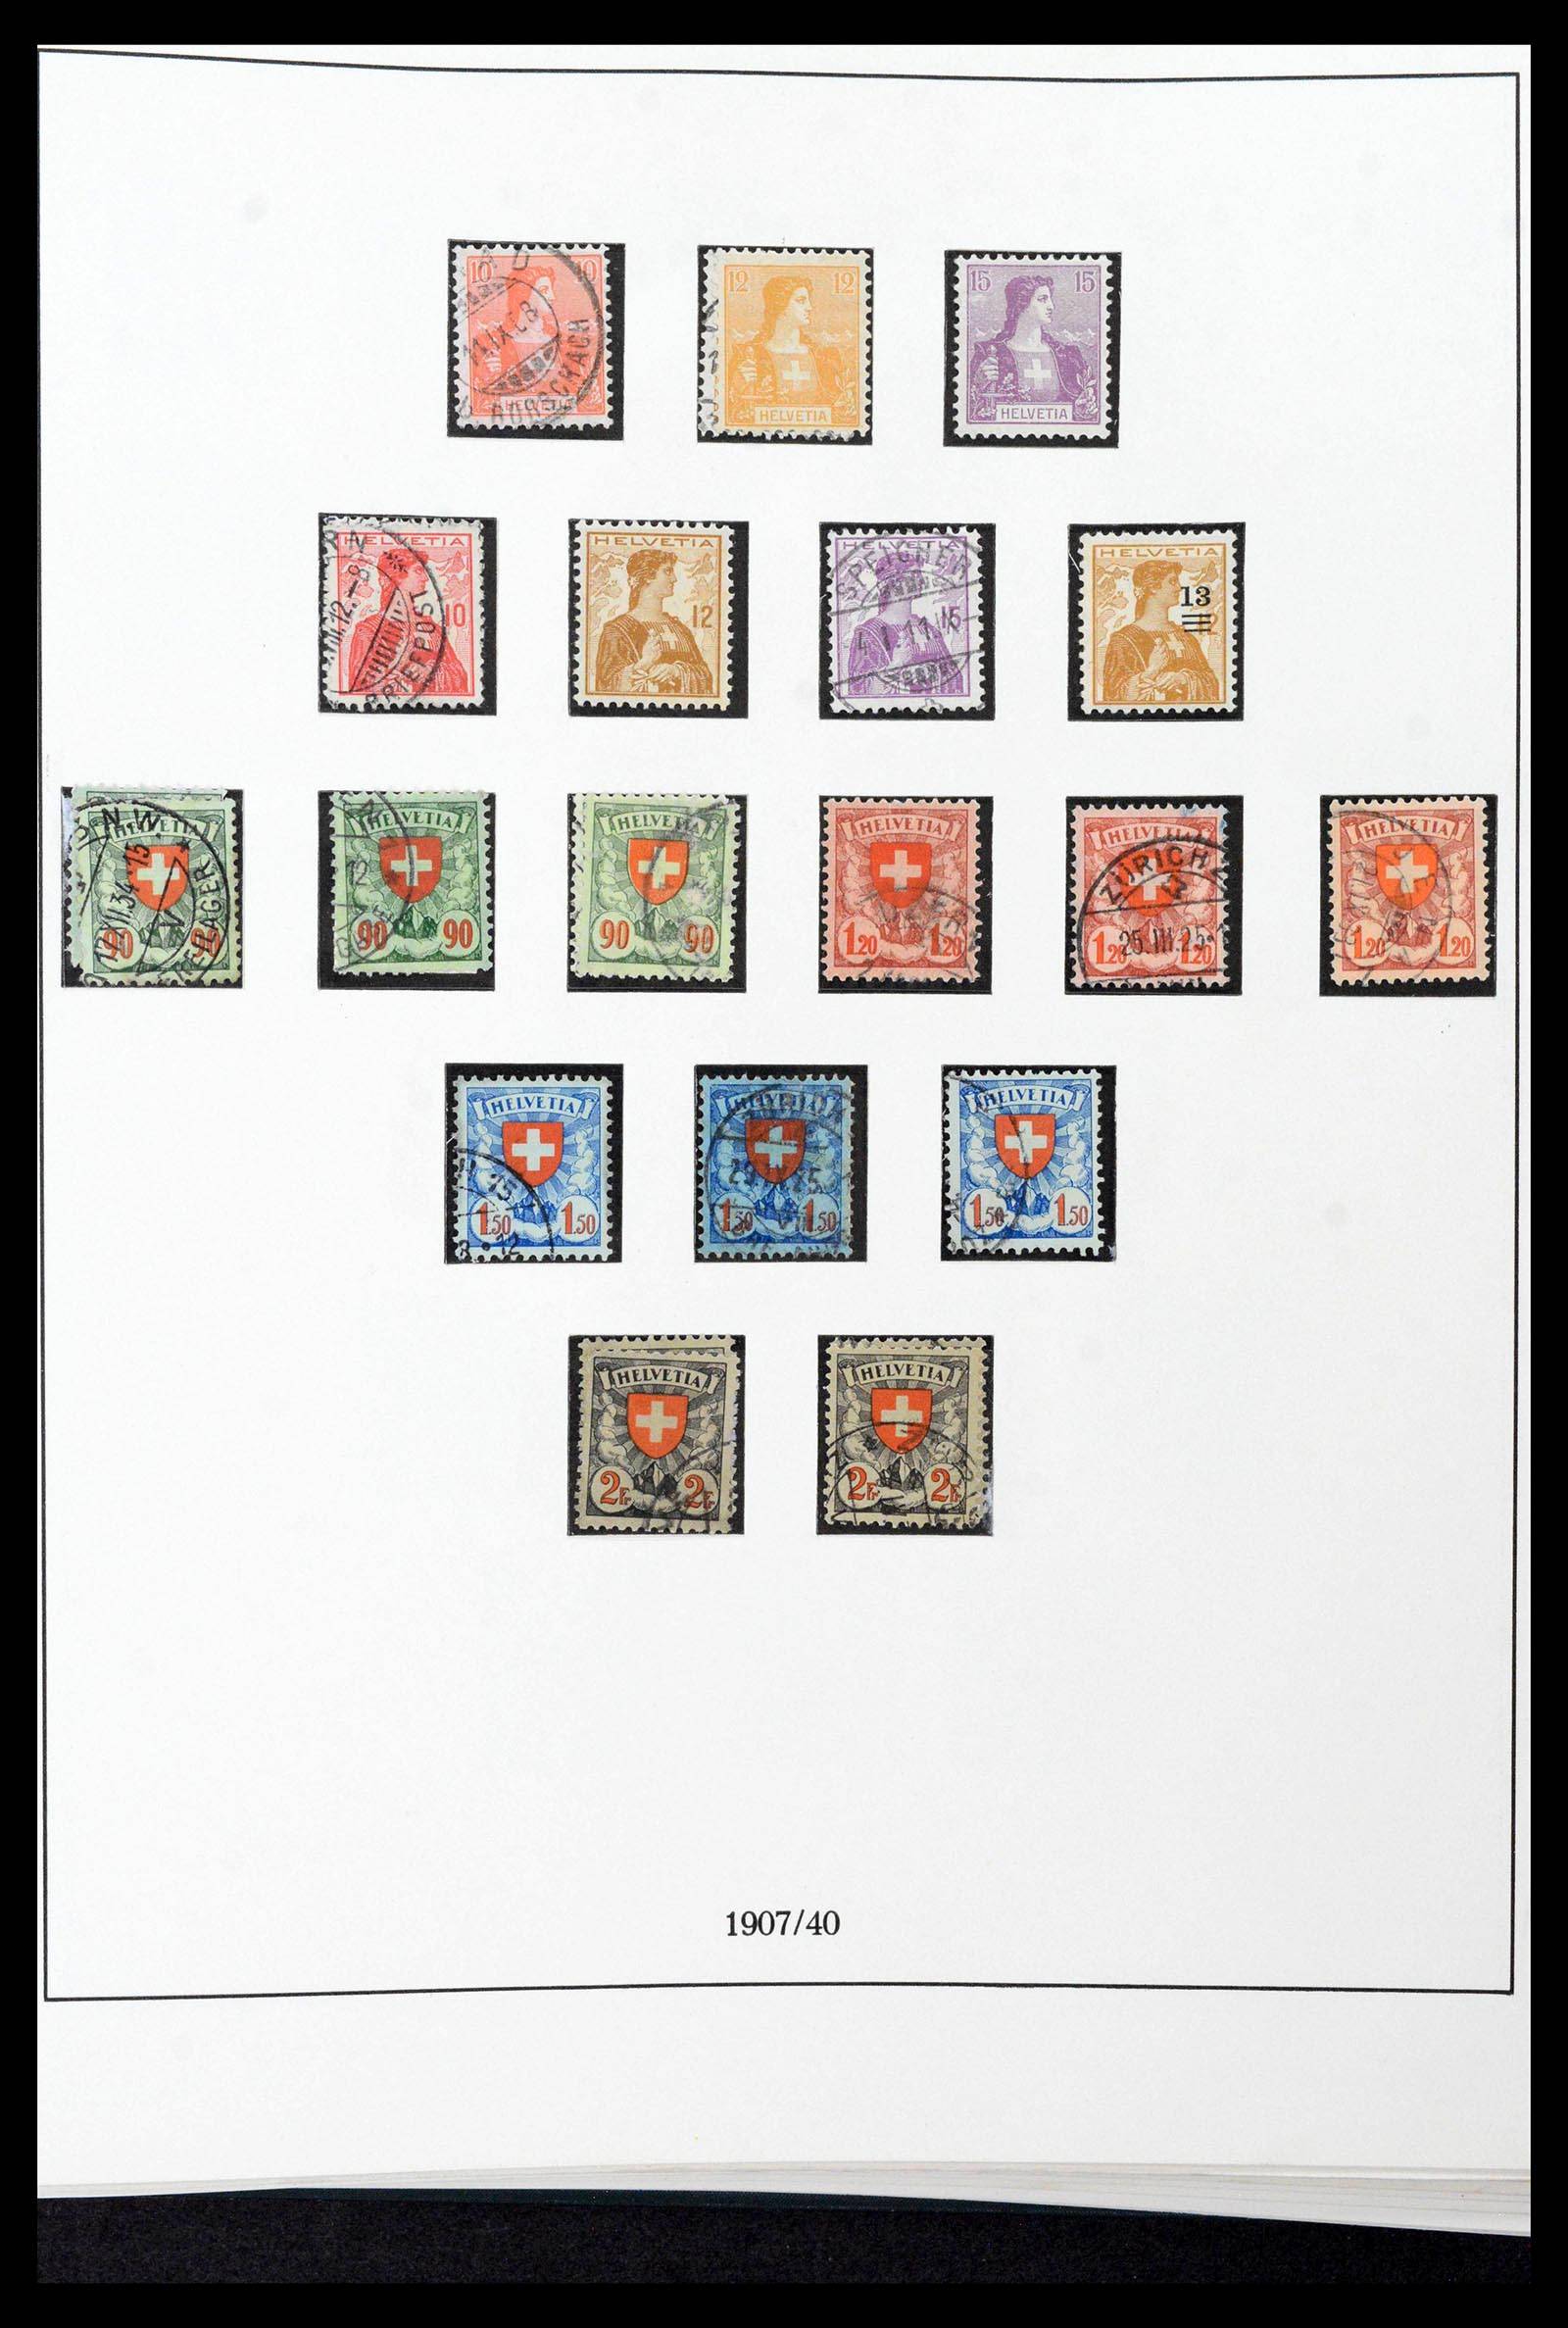 39235 0014 - Stamp collection 39235 Switzerland 1843-1960.